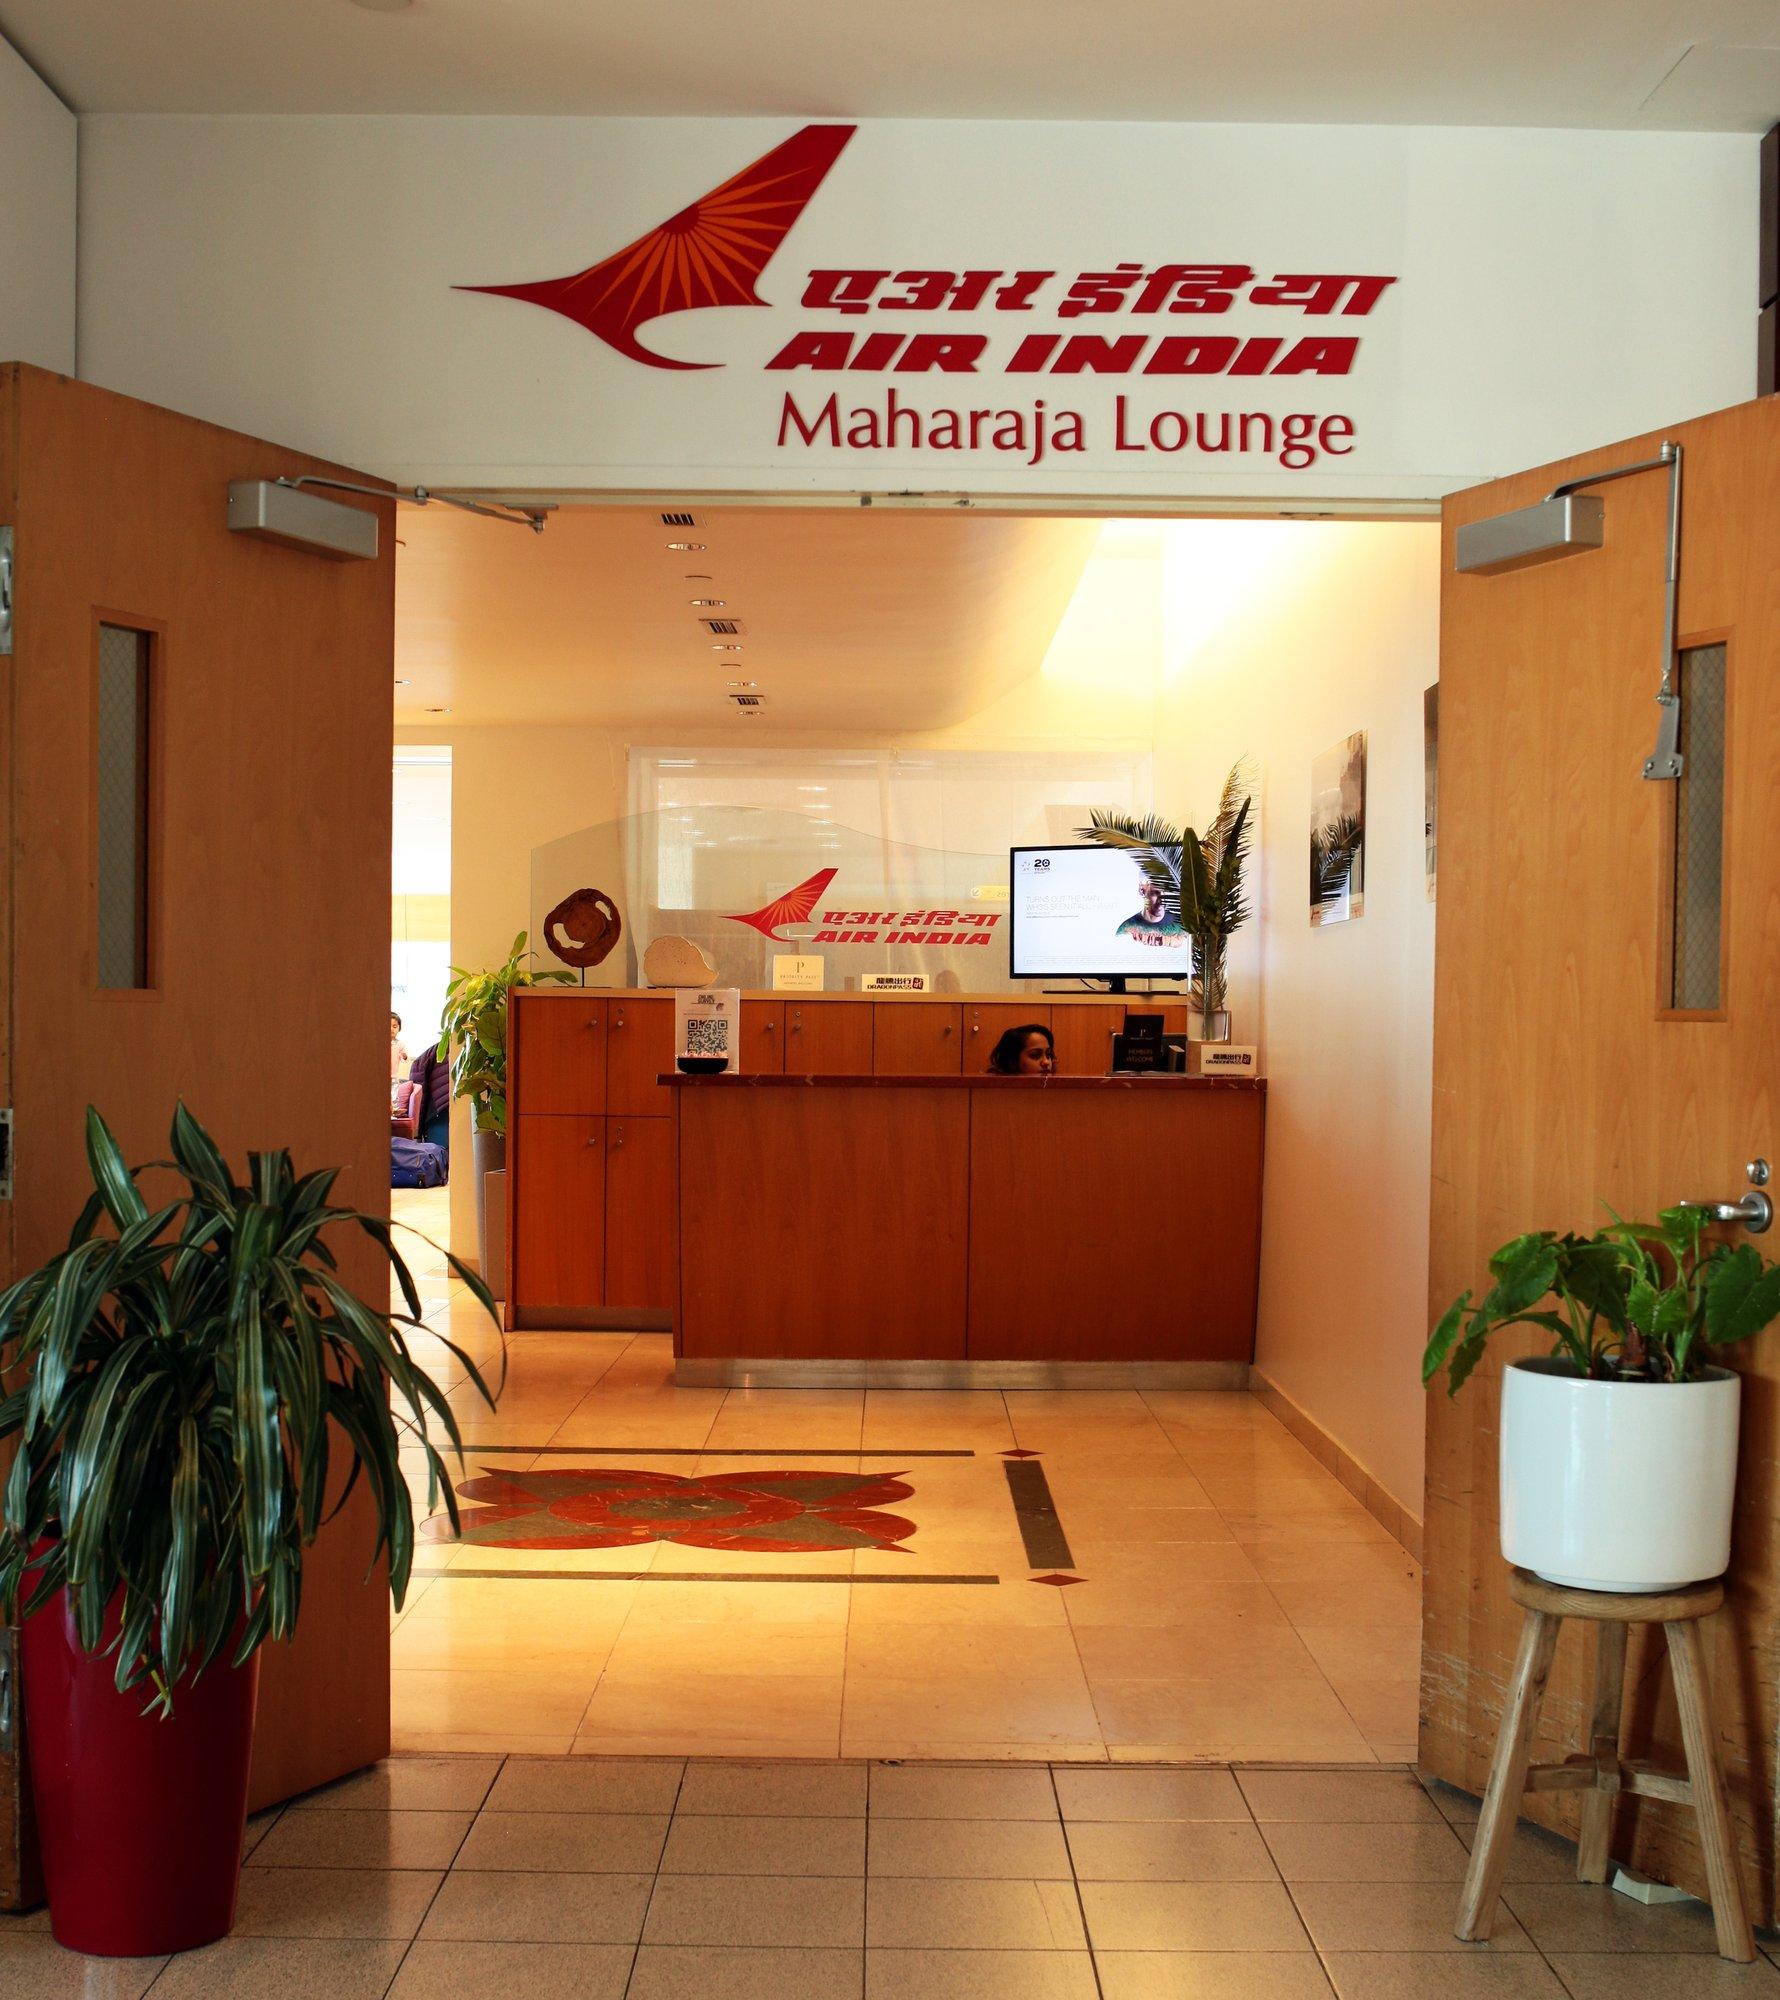 Air India Maharajah Lounge image 5 of 13